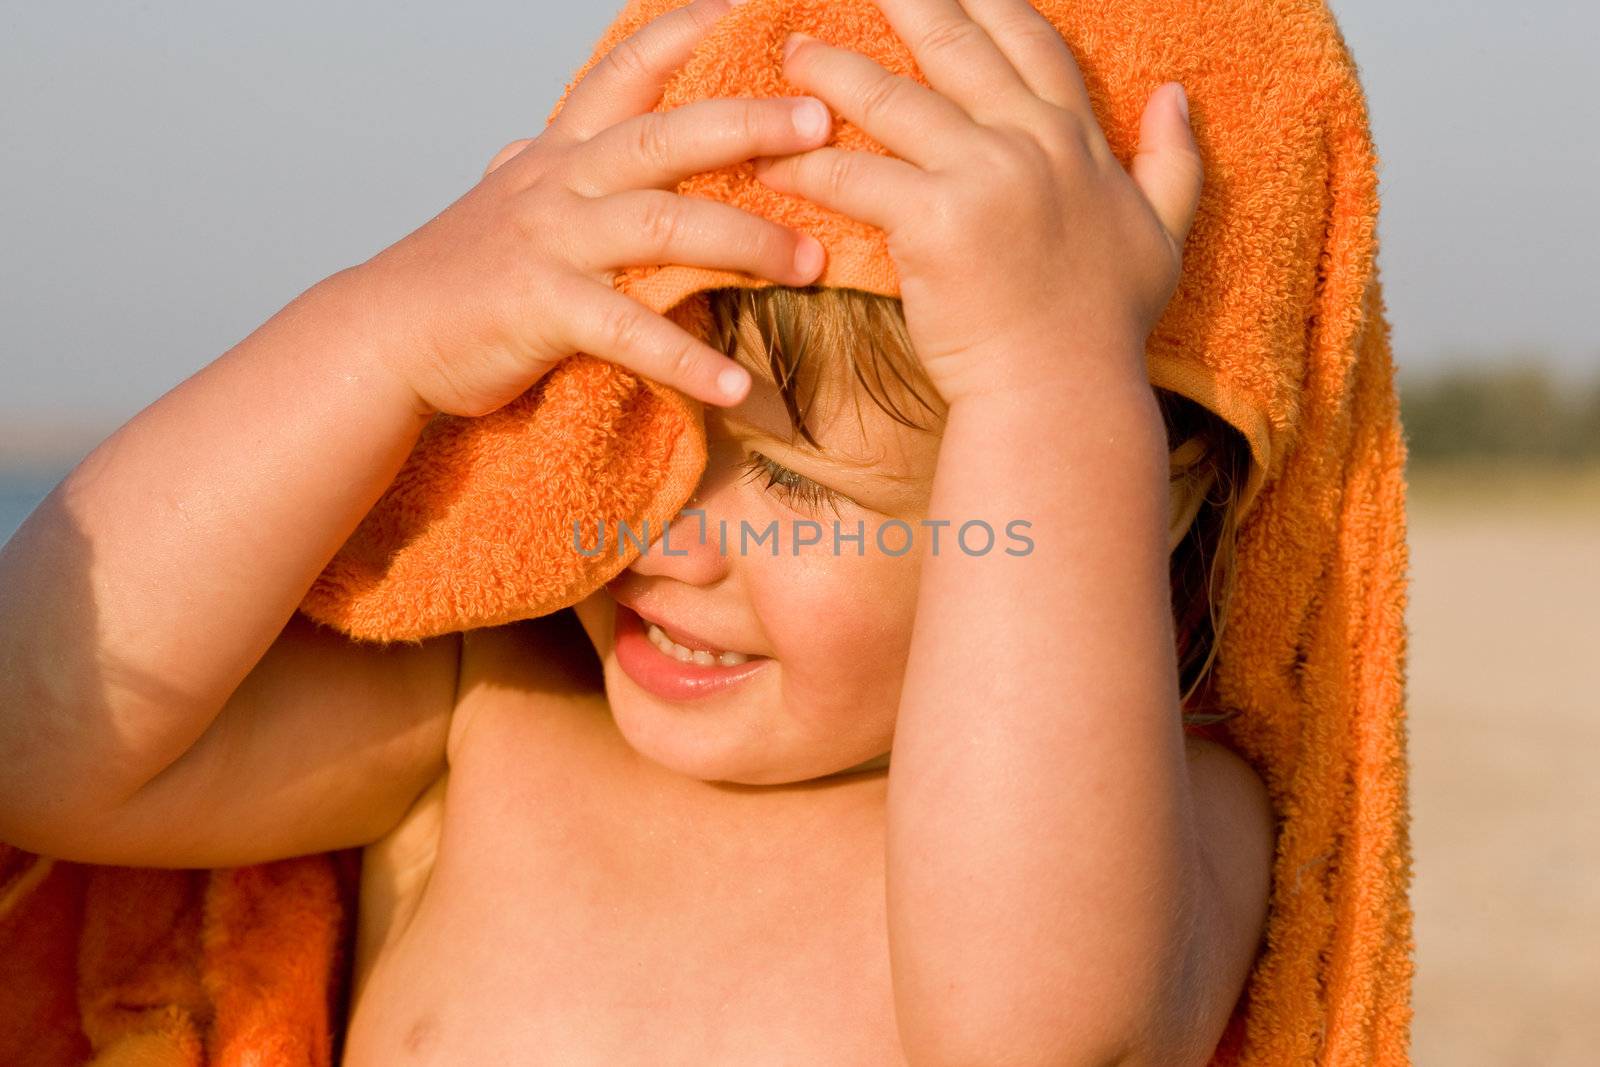 people series: portrait of little girl in orange towel